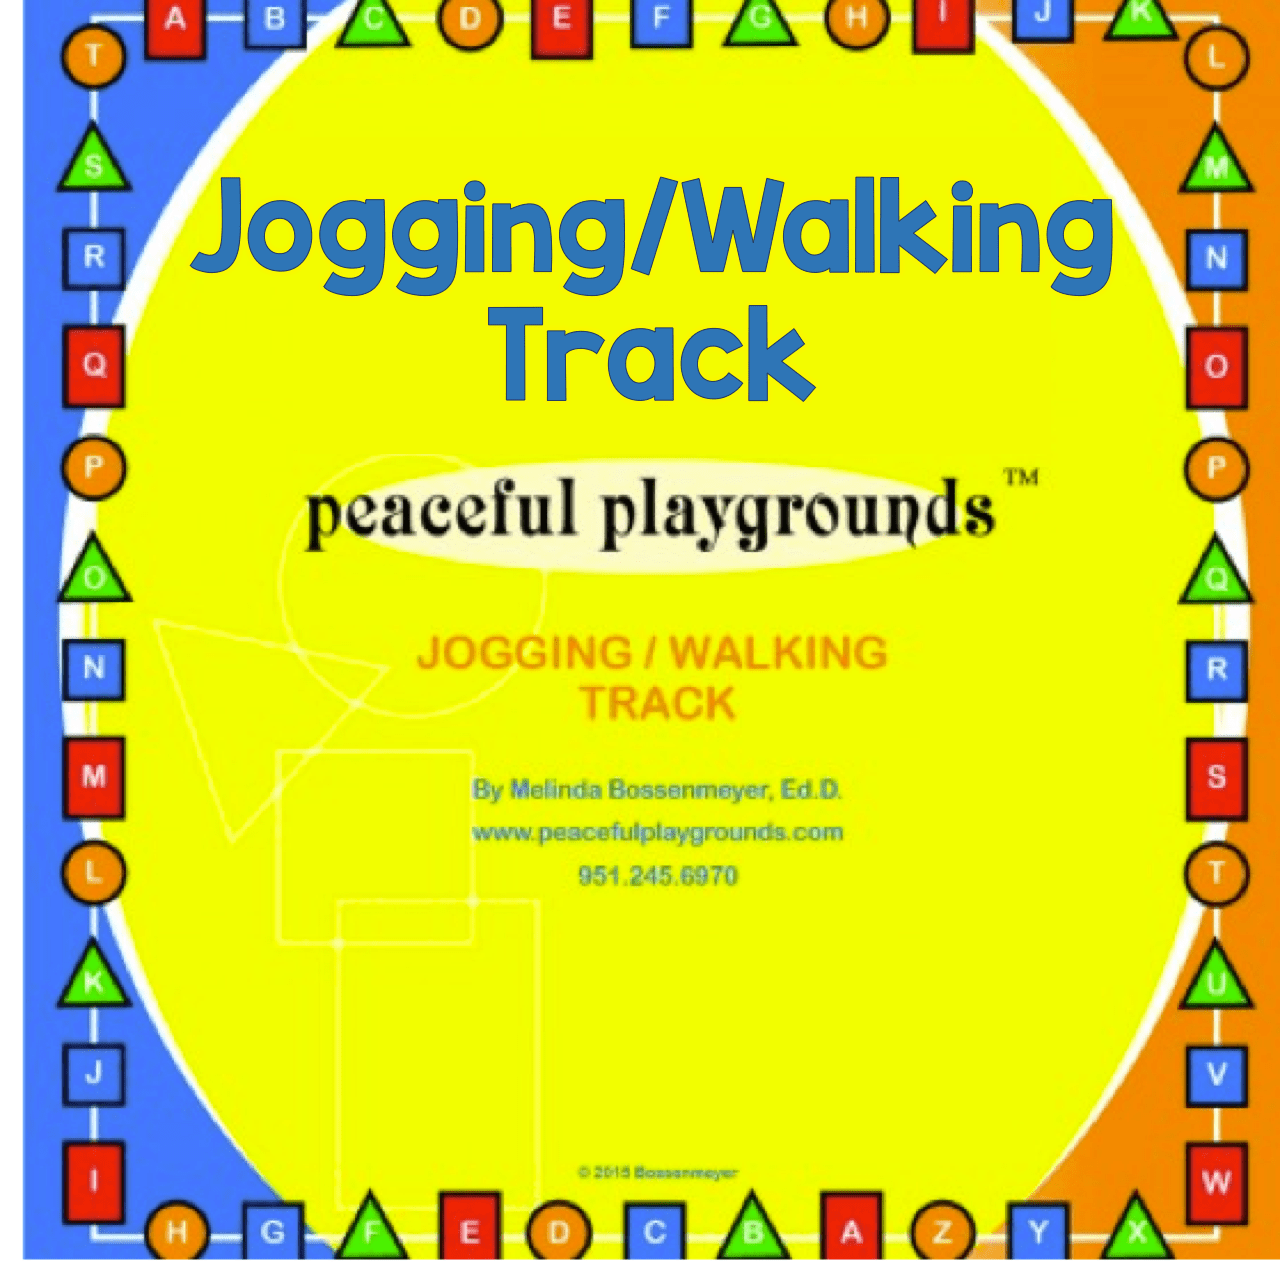 Walking/Jogging Track